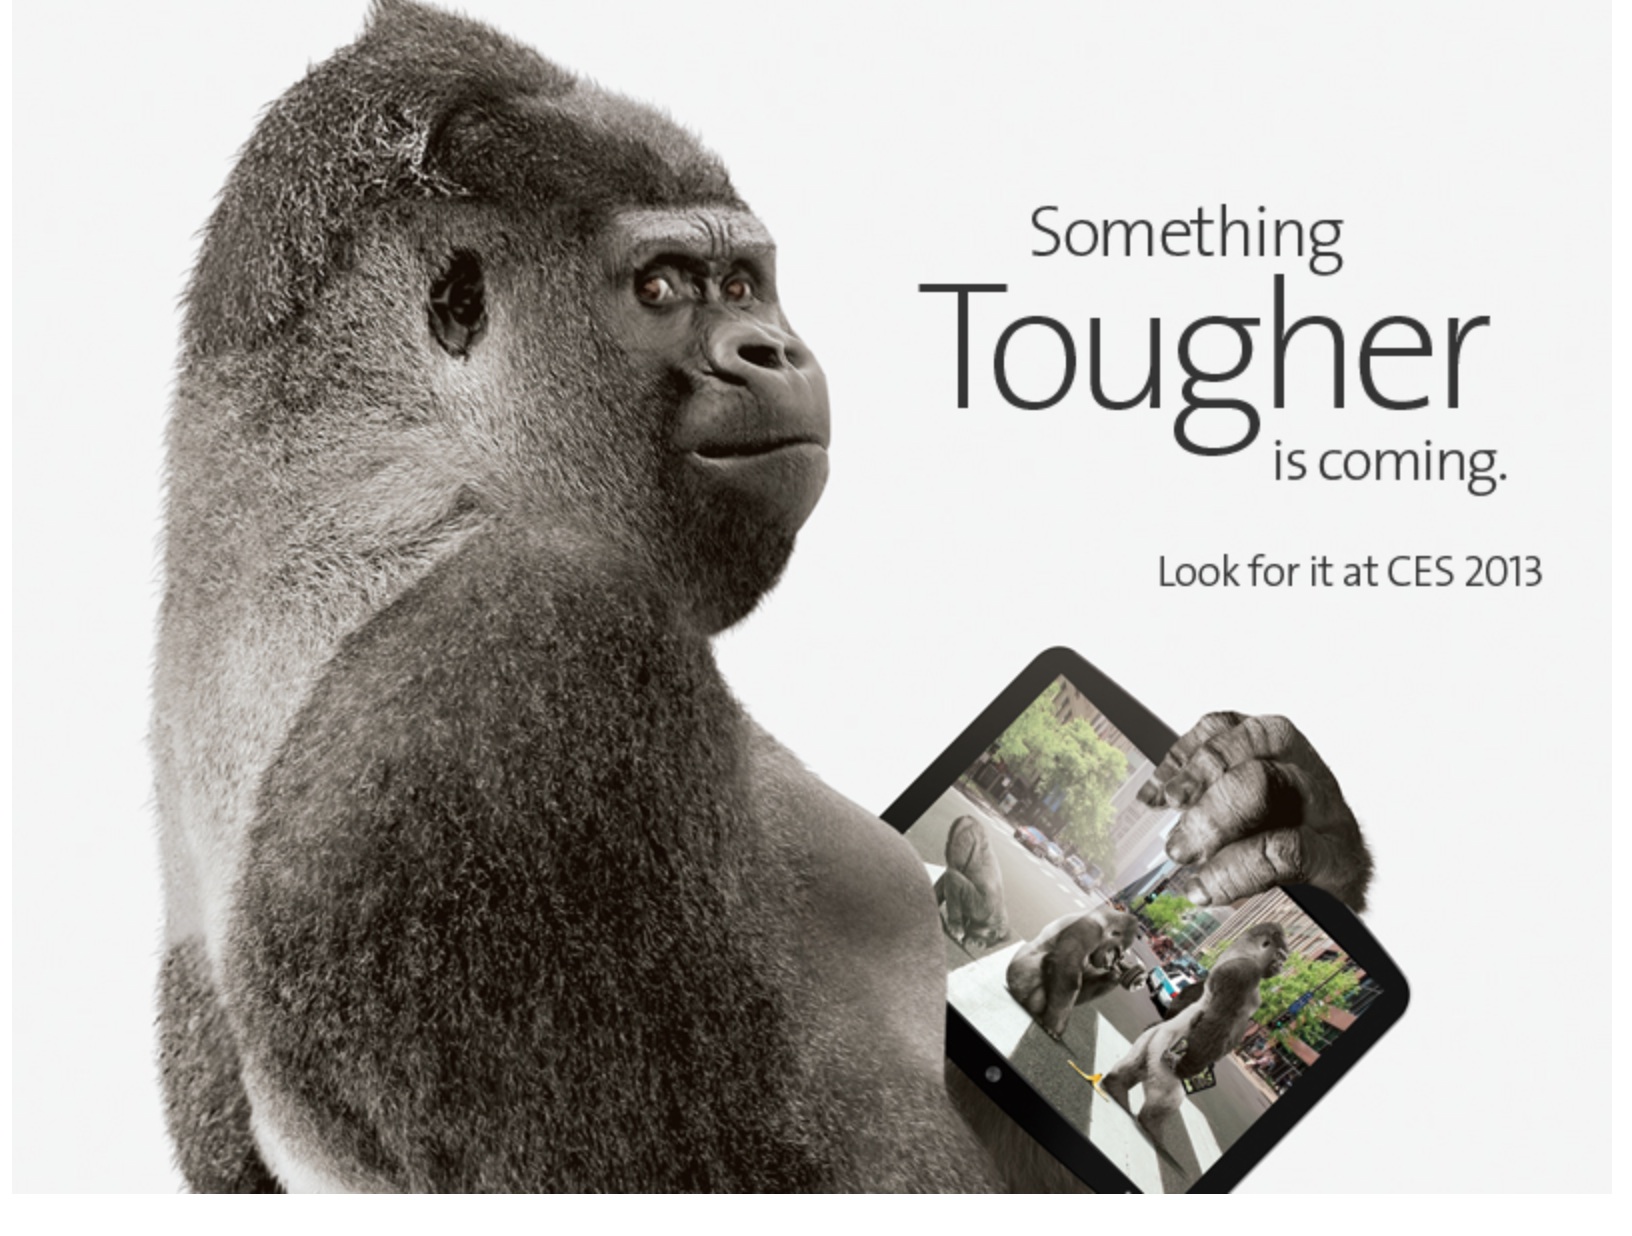 Gorilla Glass 3 in future Apple products?